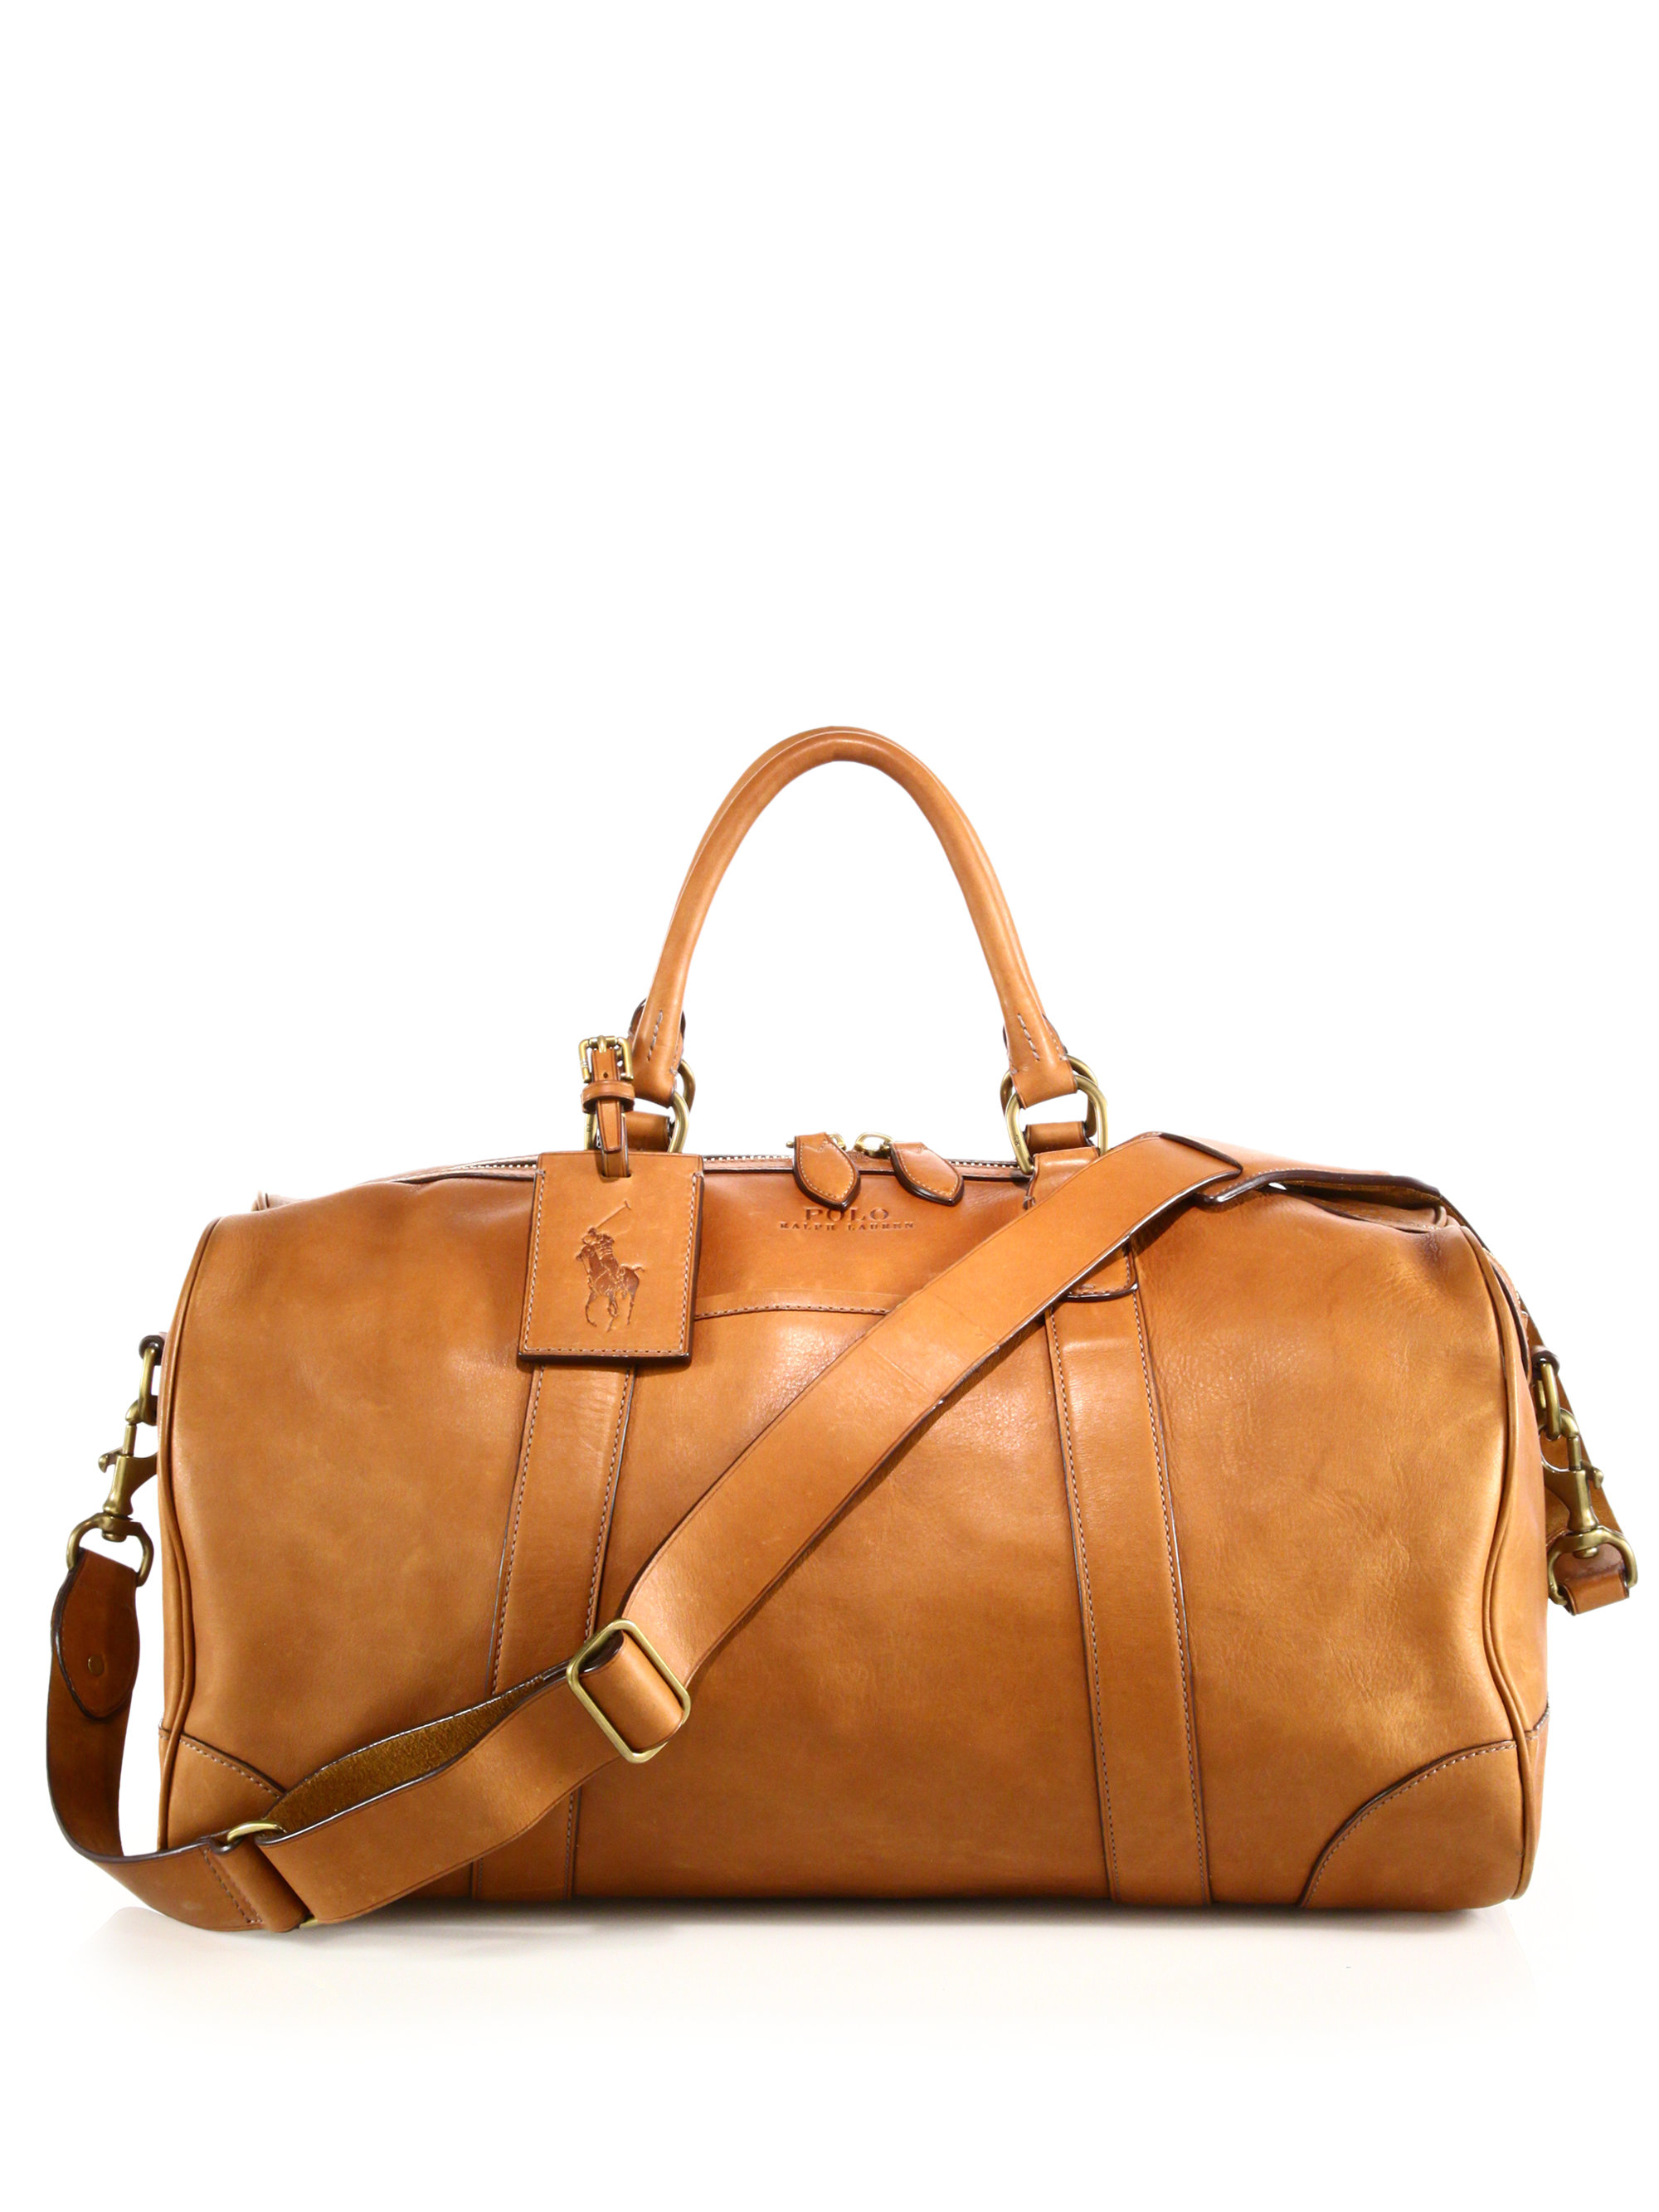 polo leather duffle bag